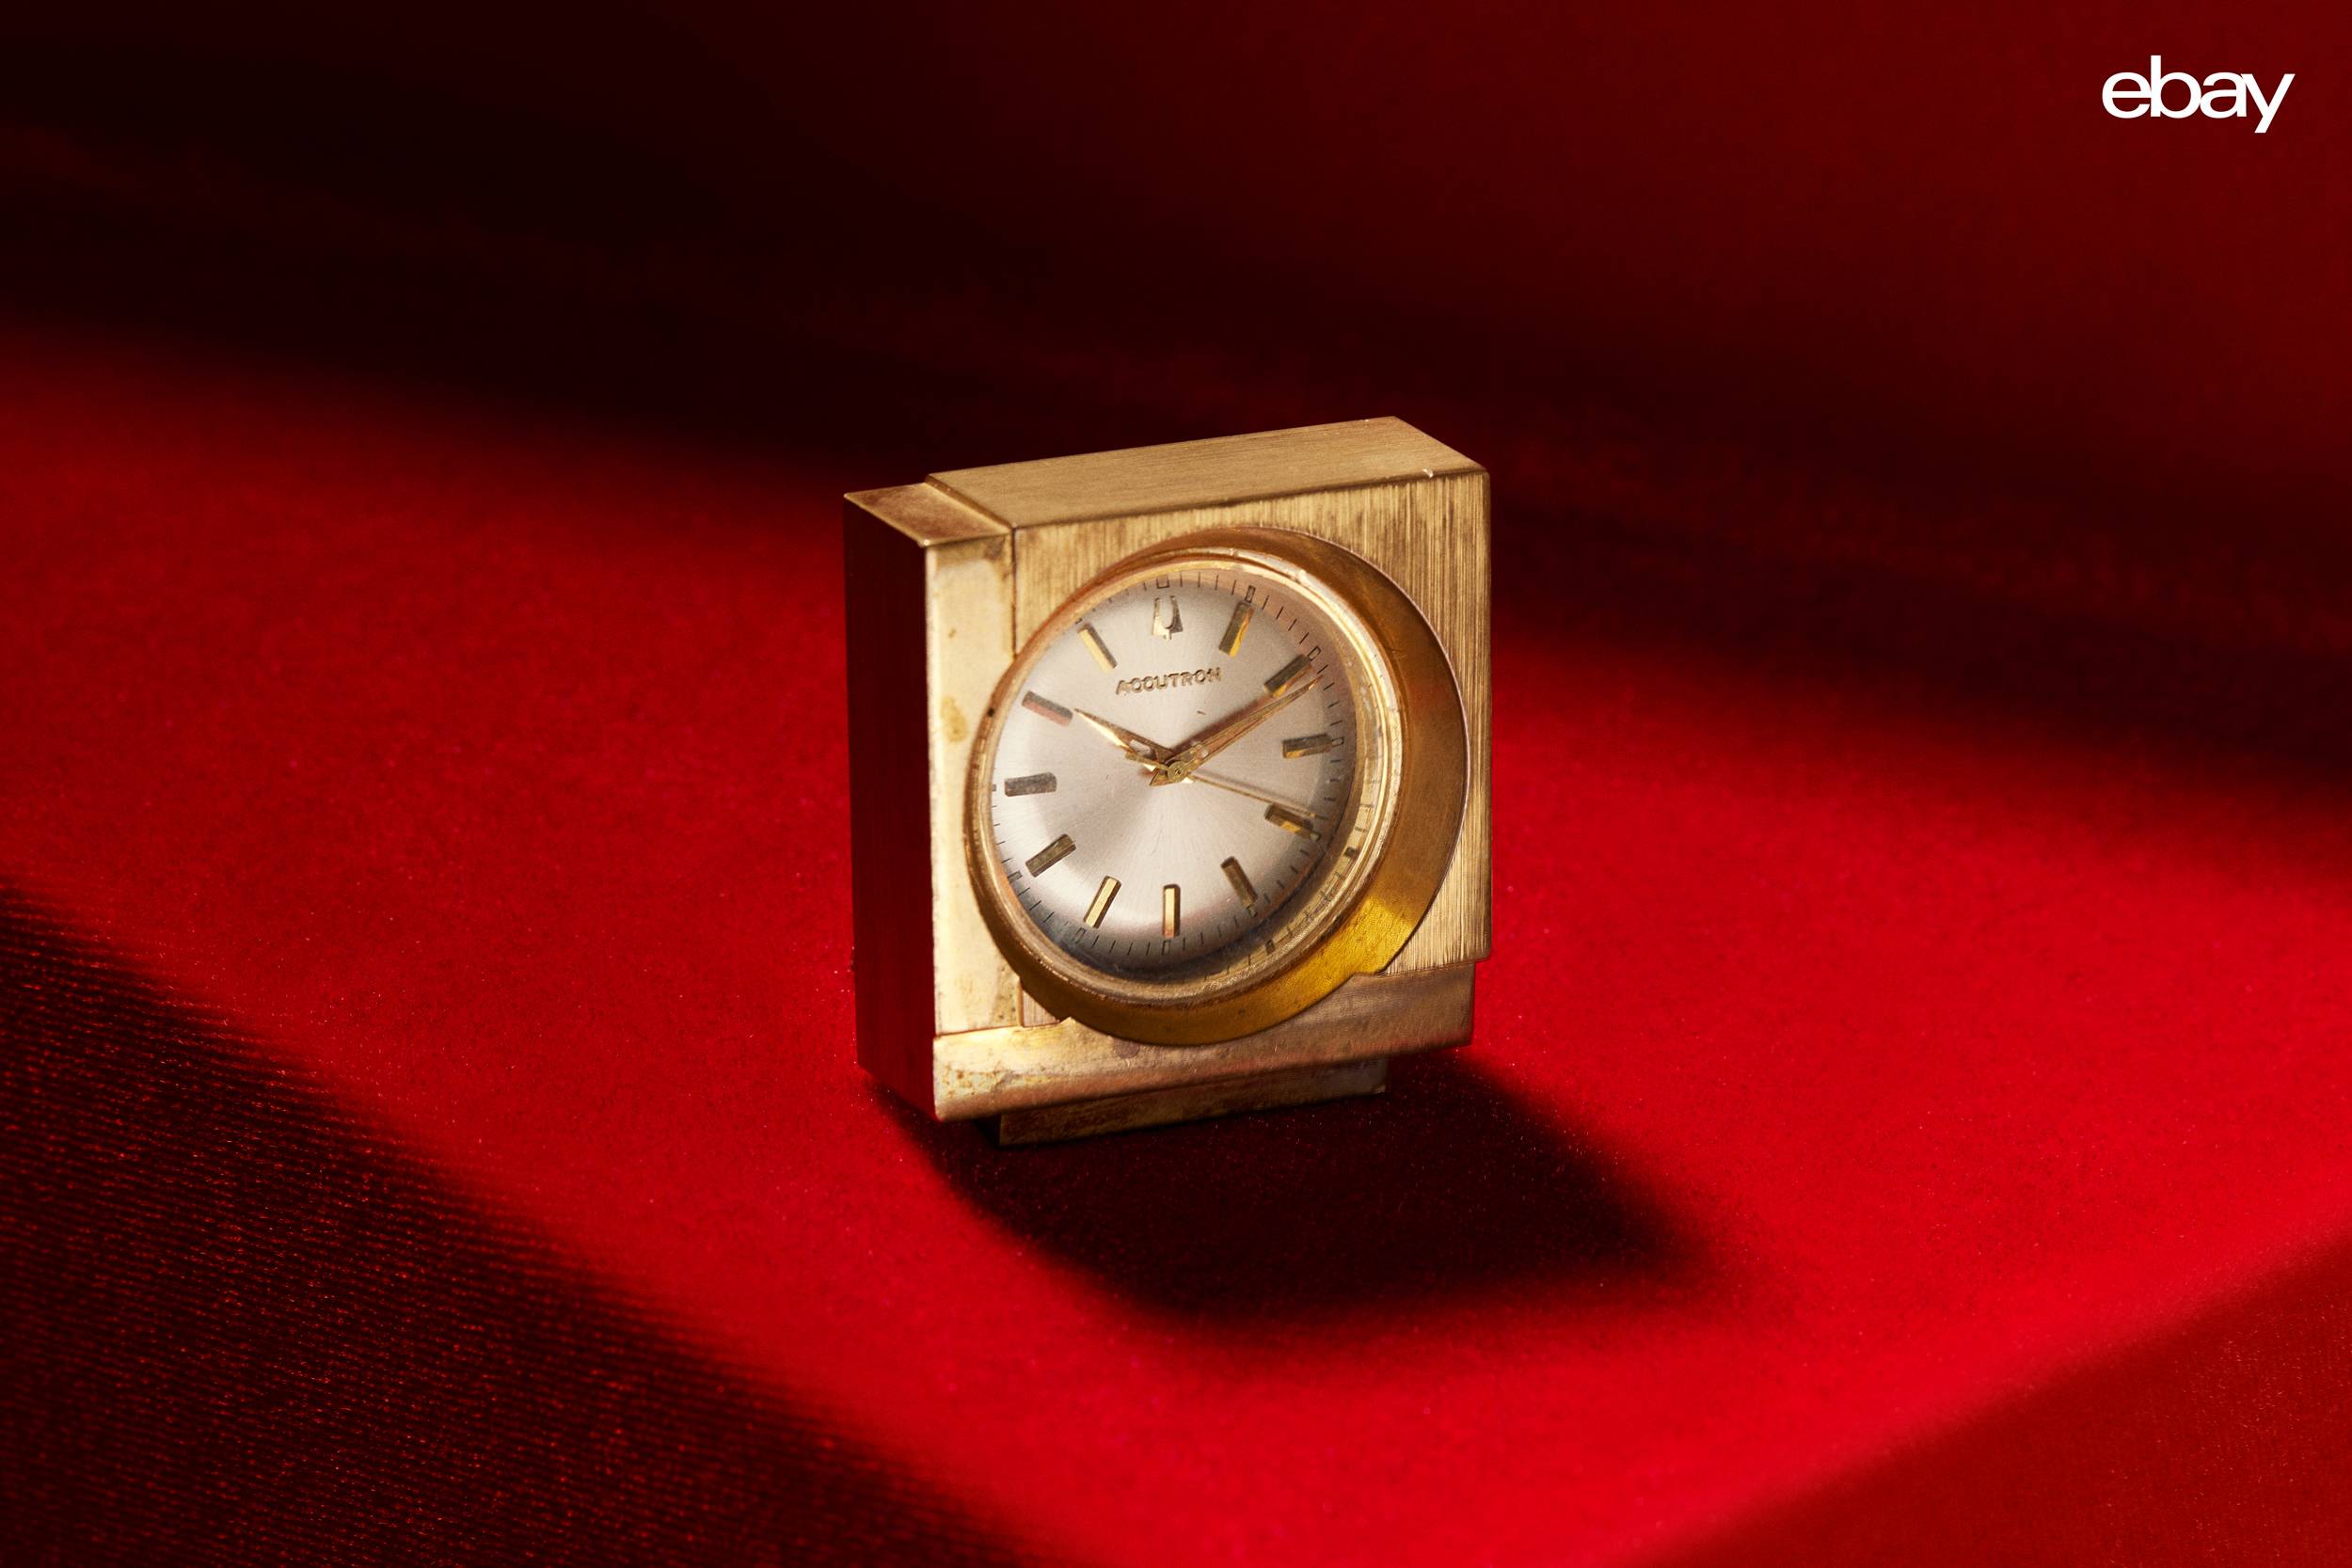 Greta Garbo's 1960's Bulova Accutron Desk Watch, available on ebay